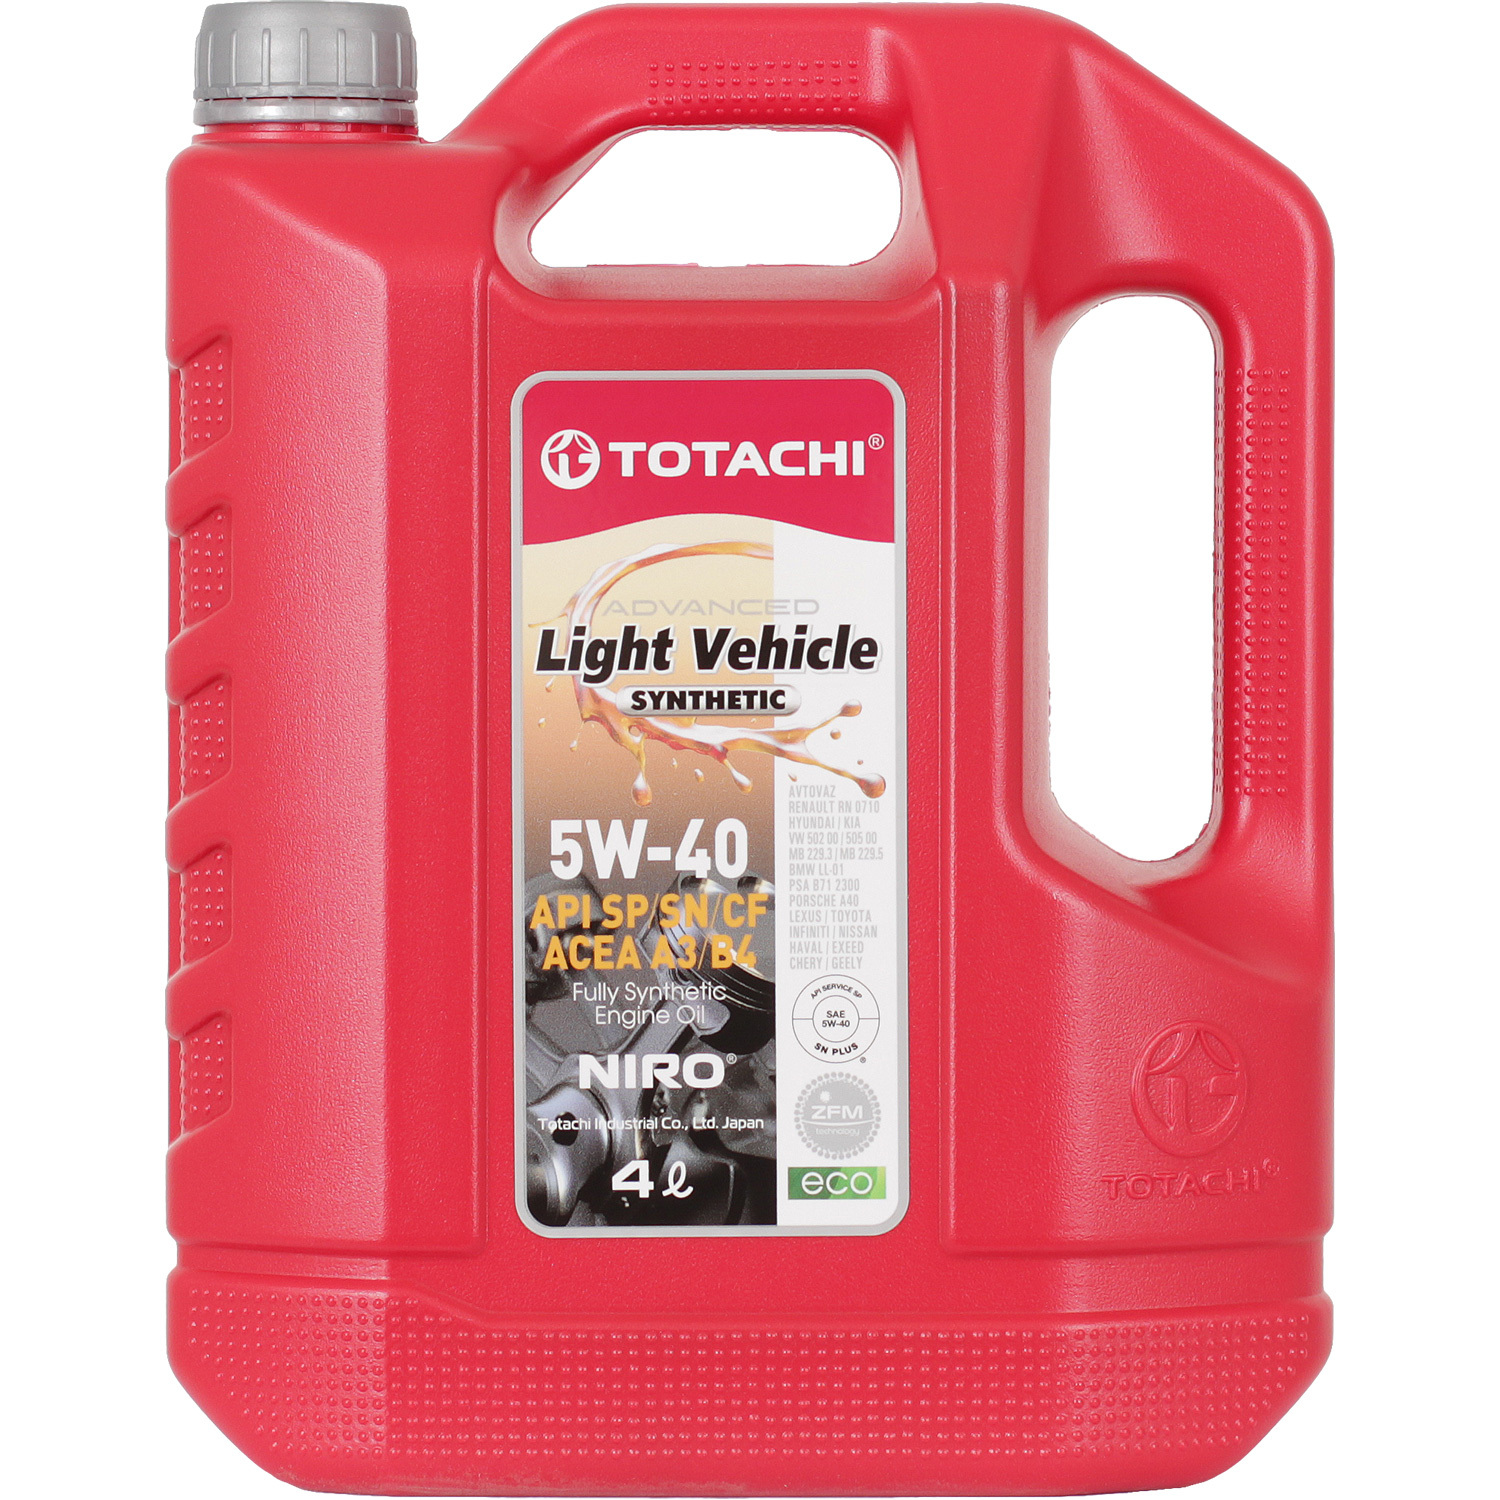 Totachi Моторное масло Totachi NIRO LV Synthetic 5W-40, 4 л масло моторное totachi niro lv sae 5w 30 api sp sn plus полусинтетическое 205 л